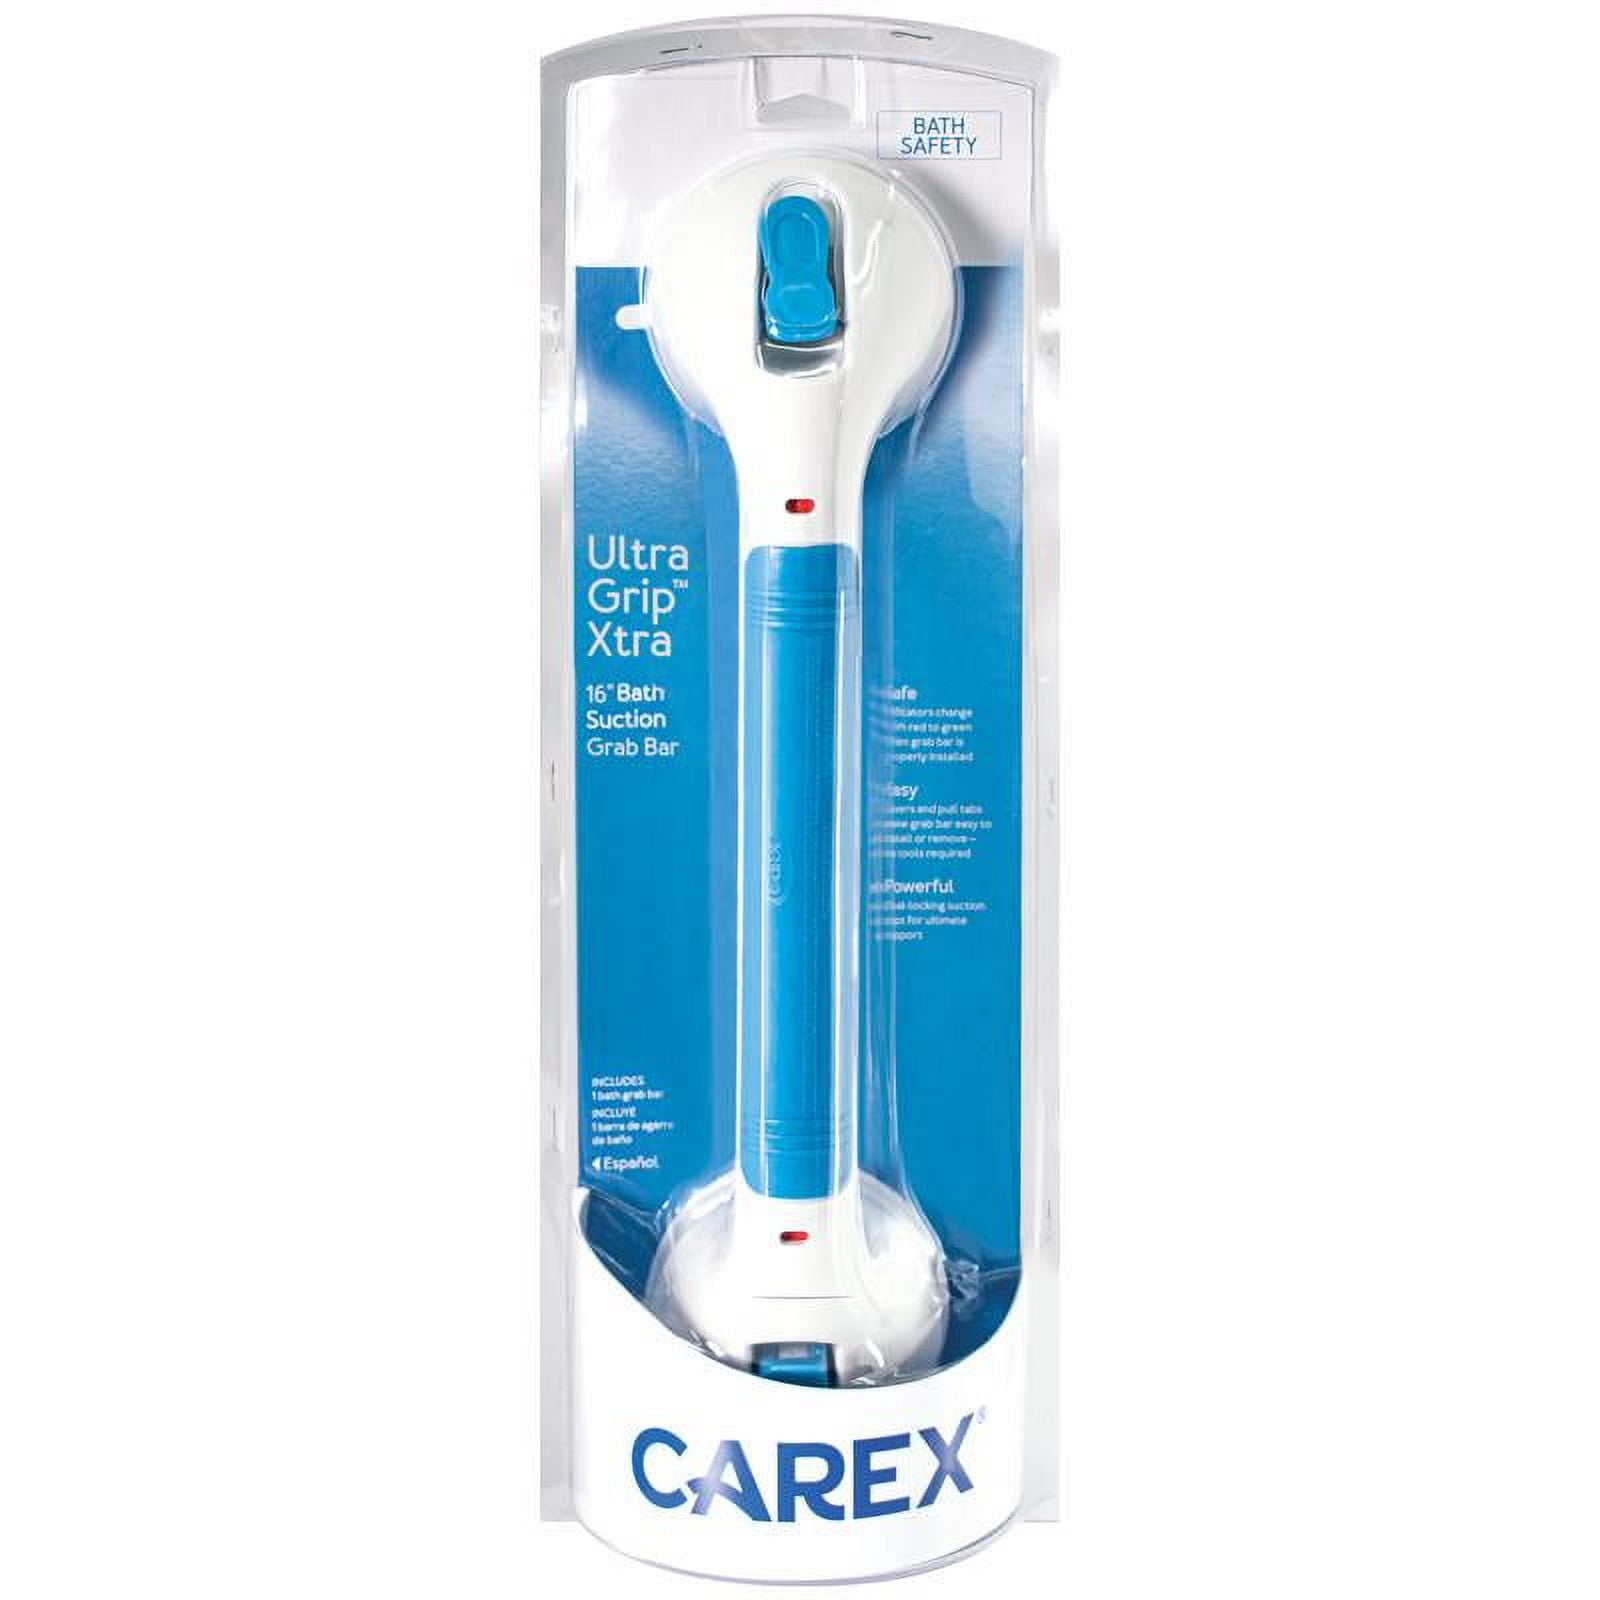 Carex Suction Shower Grab Bar, 16" Ultra Grip Handle, Dual Locking, 75 lb Weight Capacity - image 1 of 10